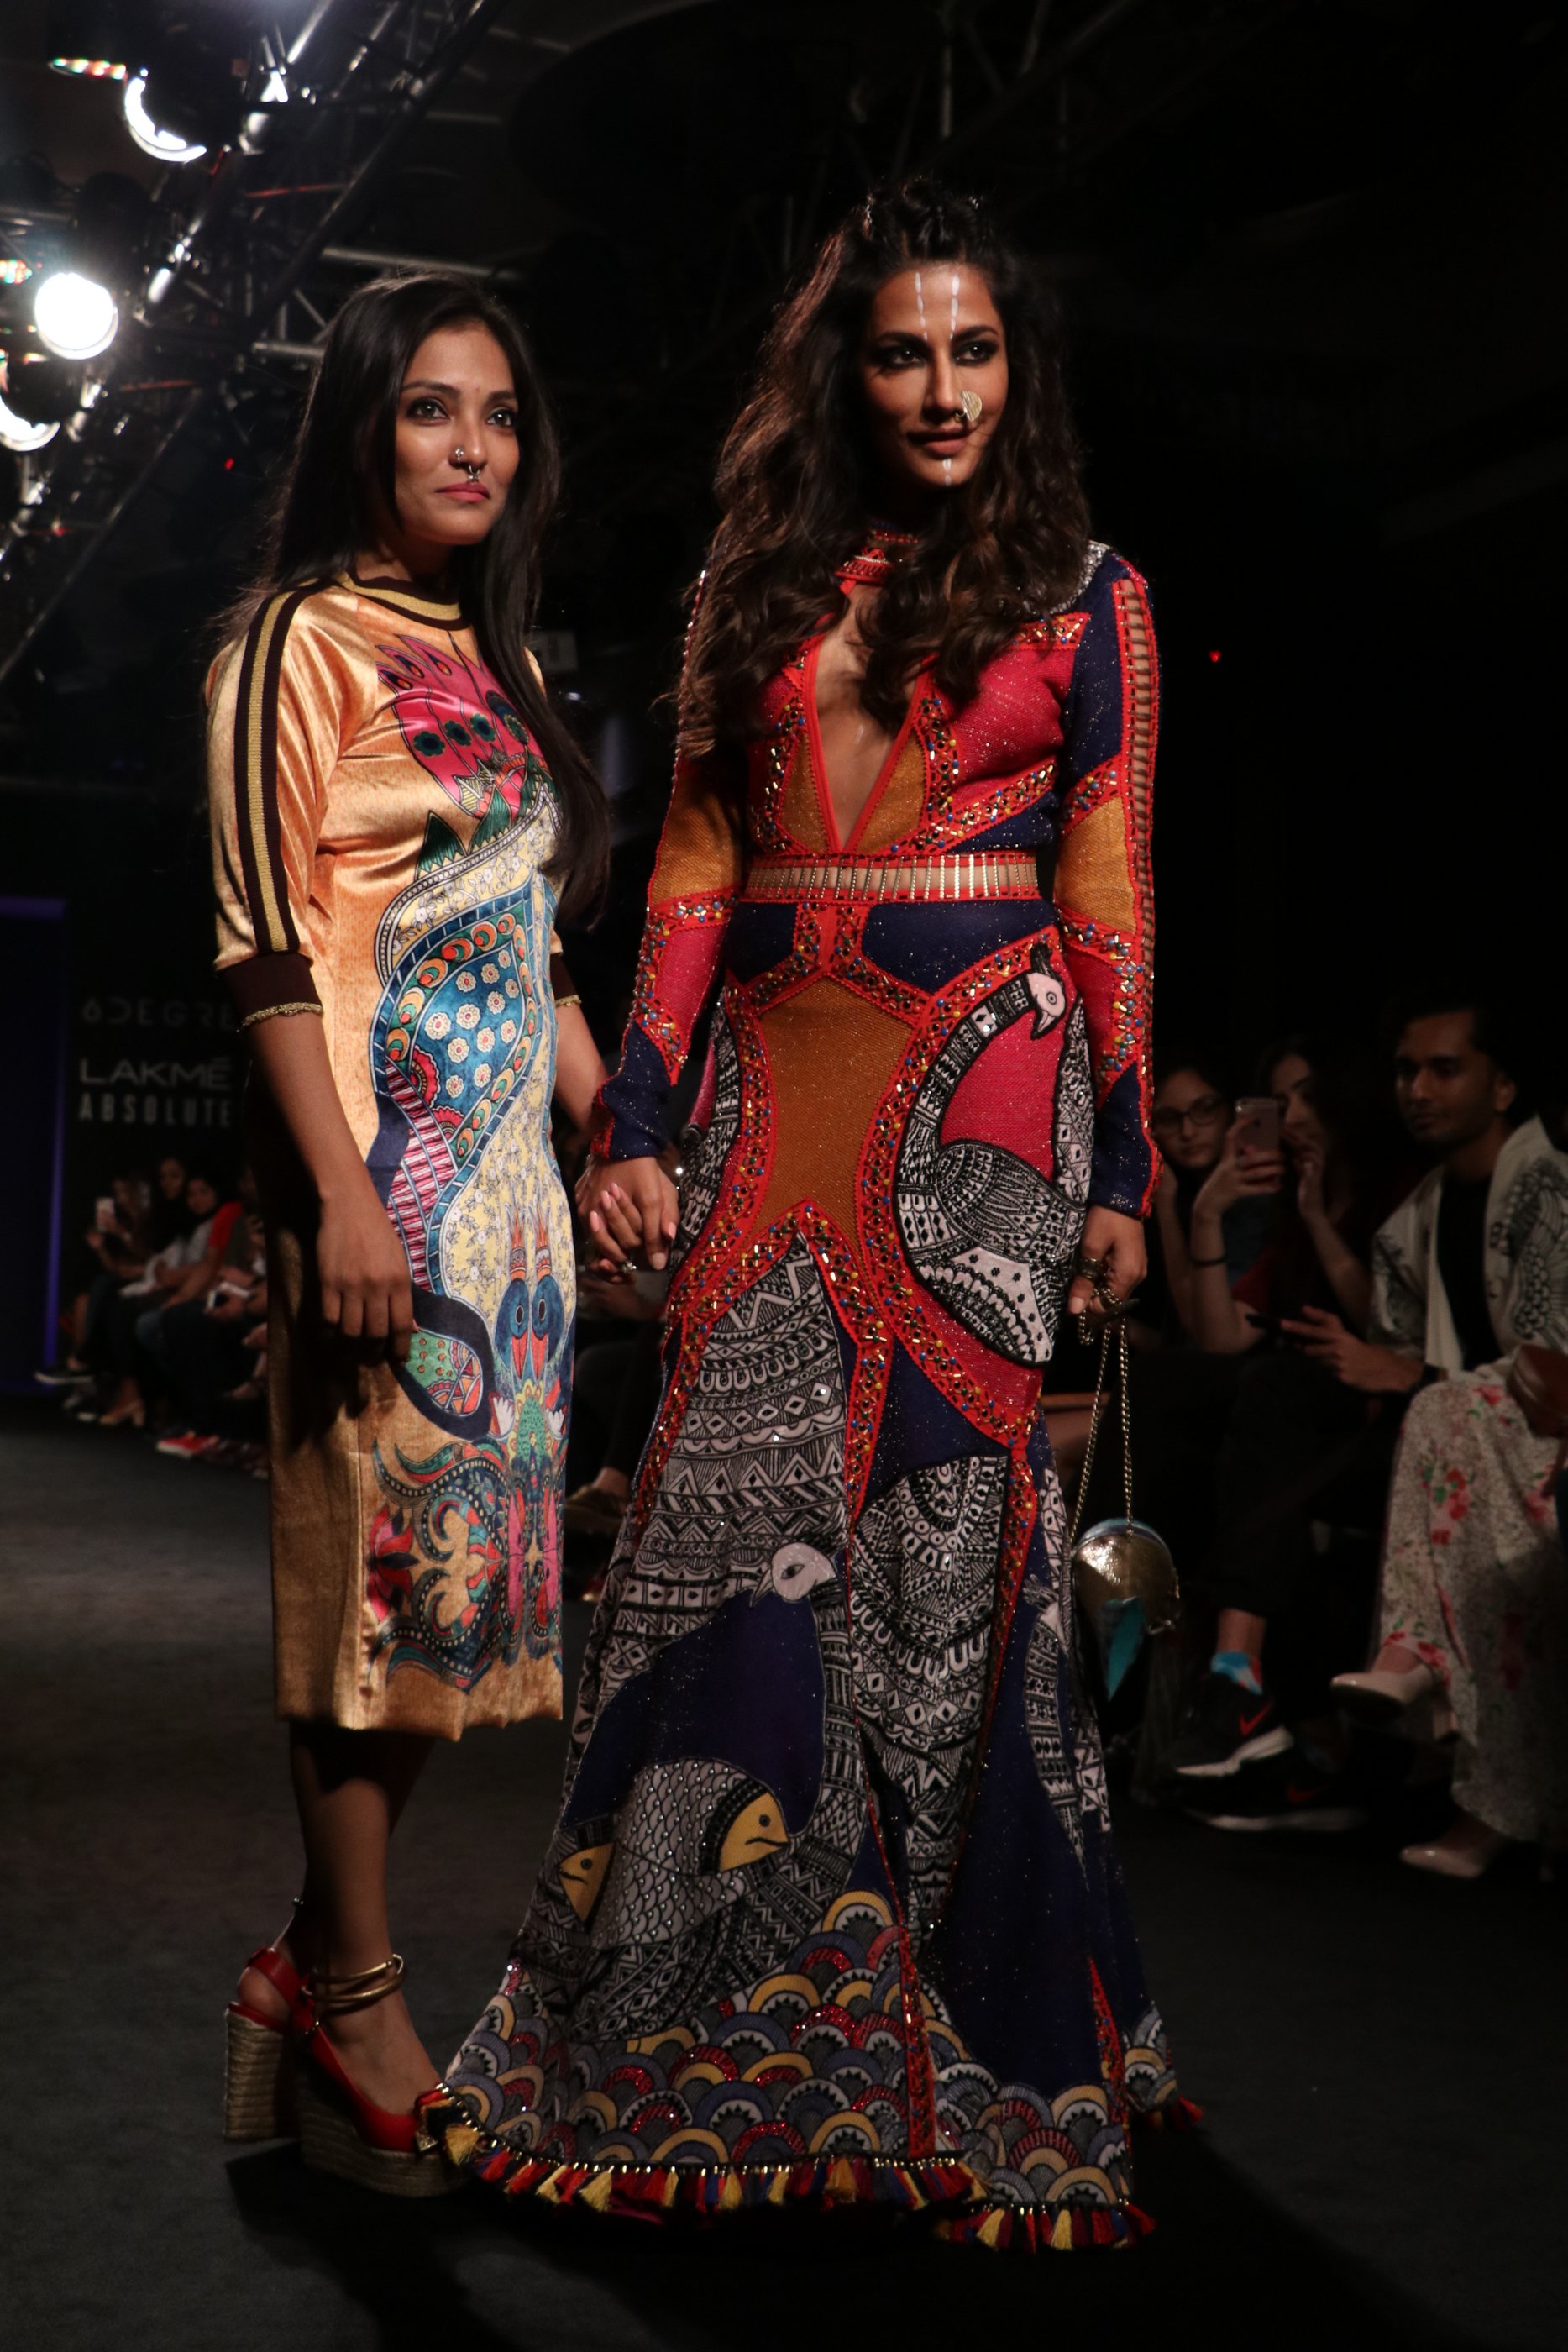  Chitrangada Singh, showstopper, Neha Agarwal, Lakme Fashion Week 2017